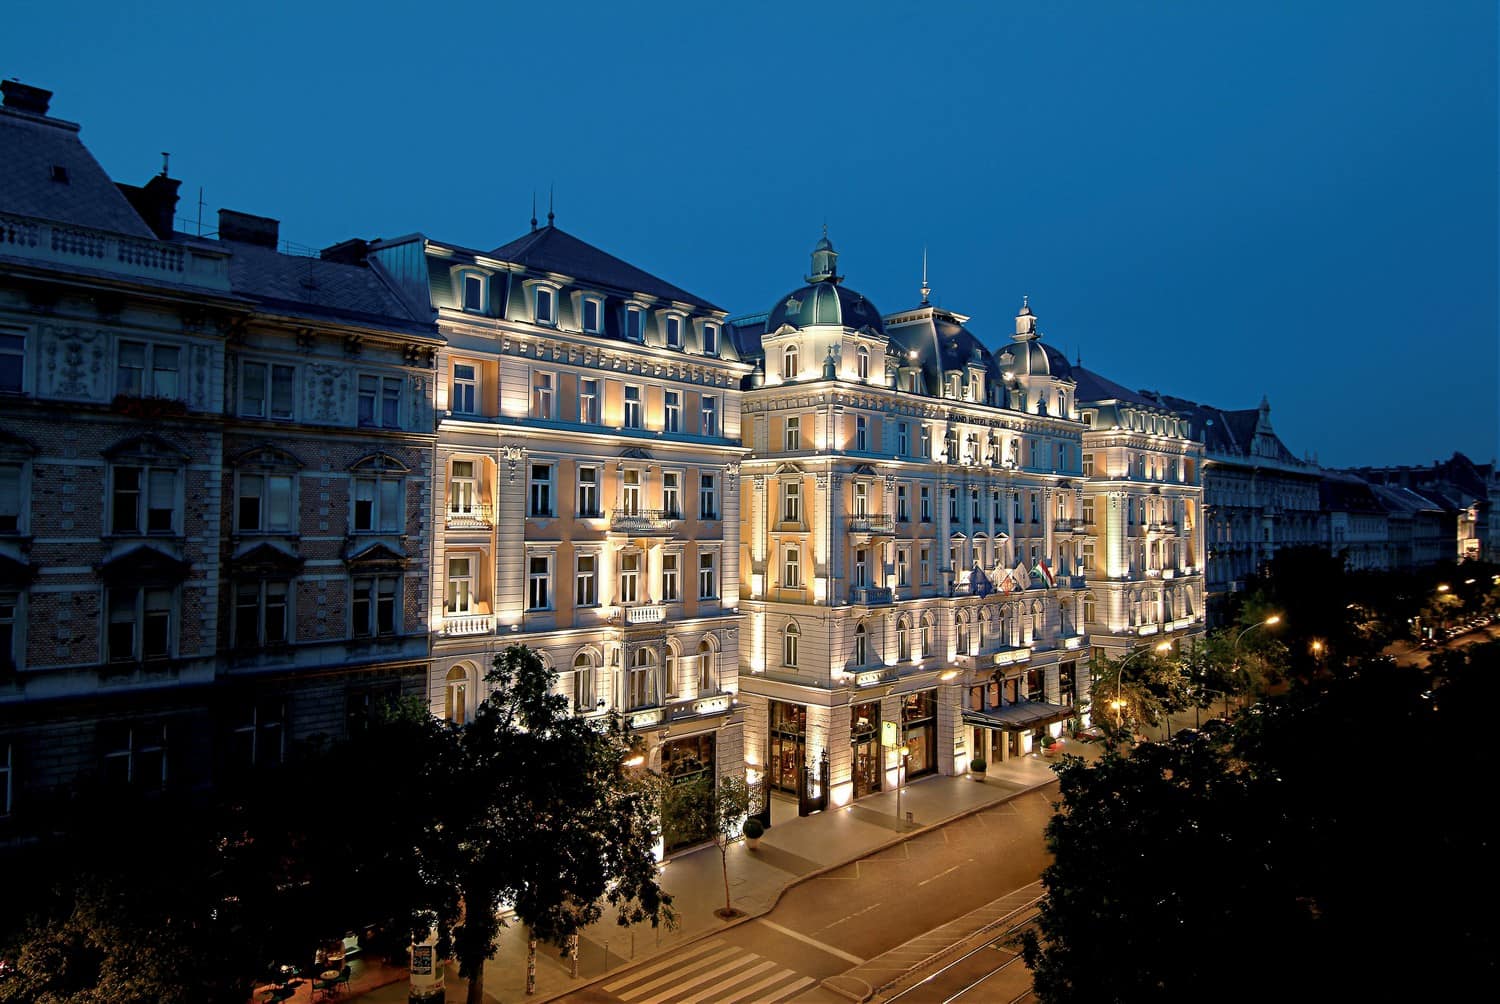 Corinthia Hotel Budapest facade